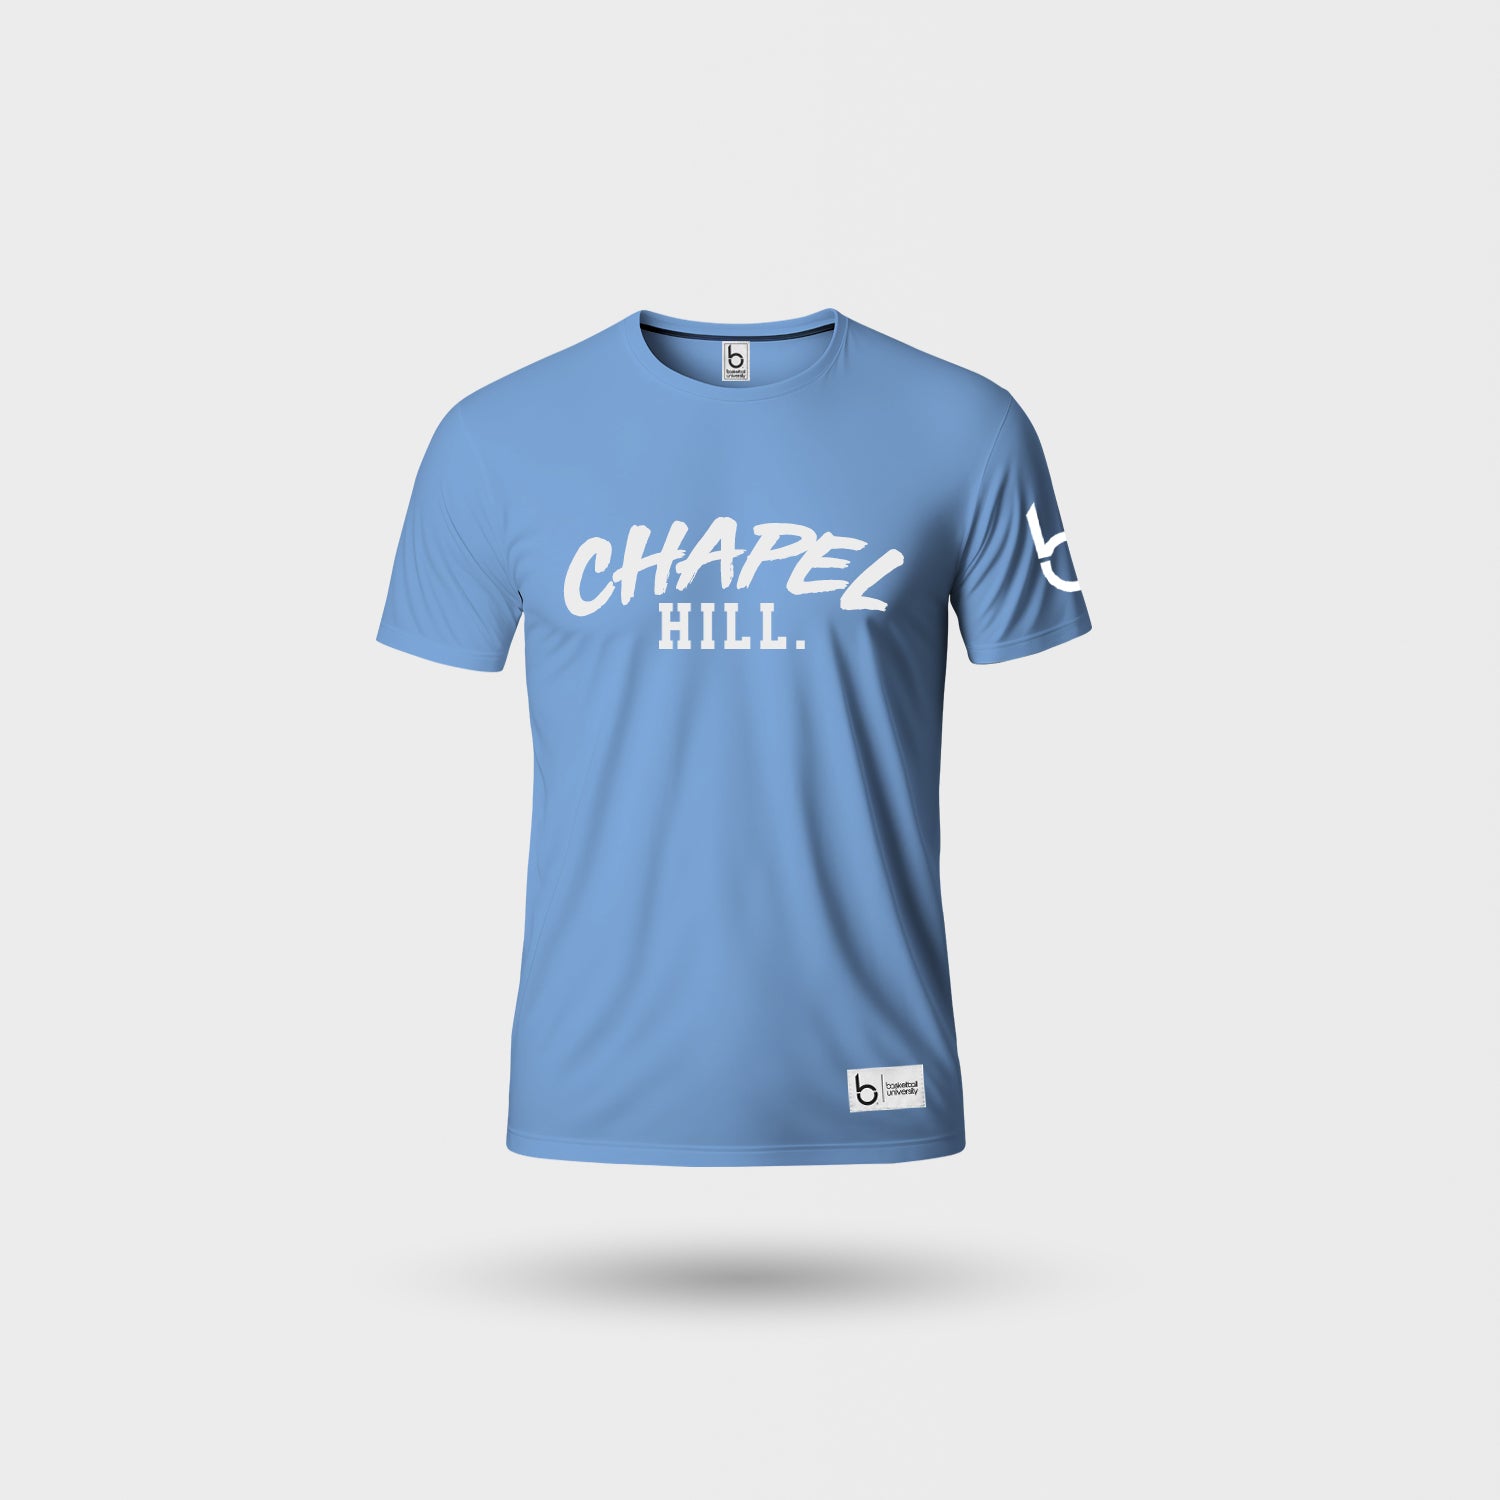 Chapel Hill - Hoop City T-Shirt